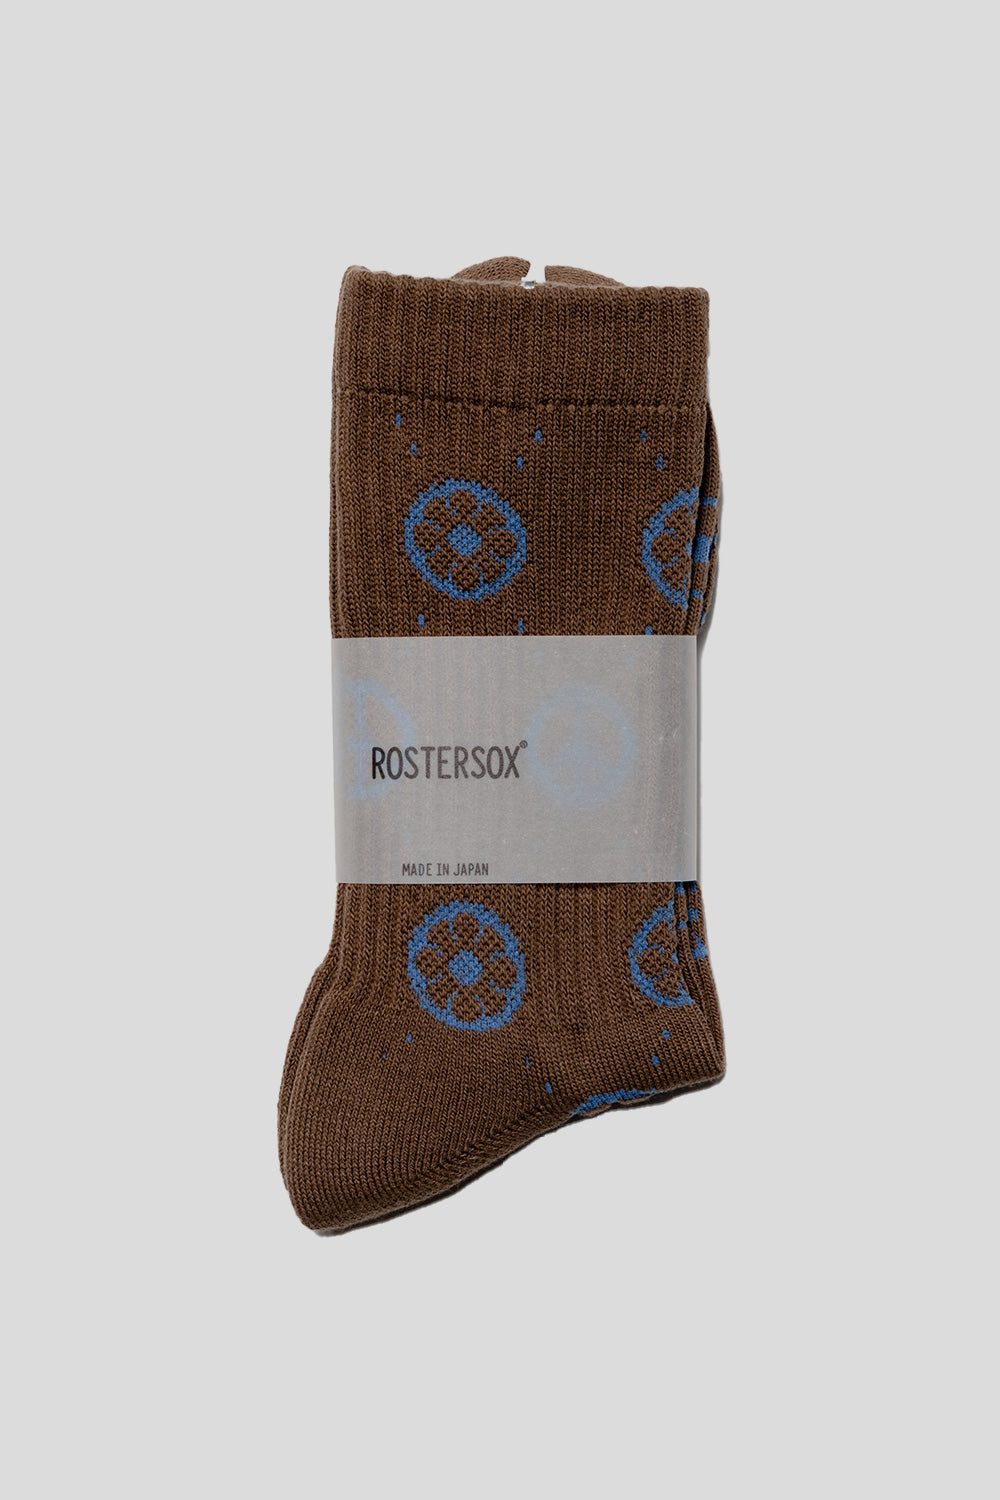 Rostersox HP Socks in Brown